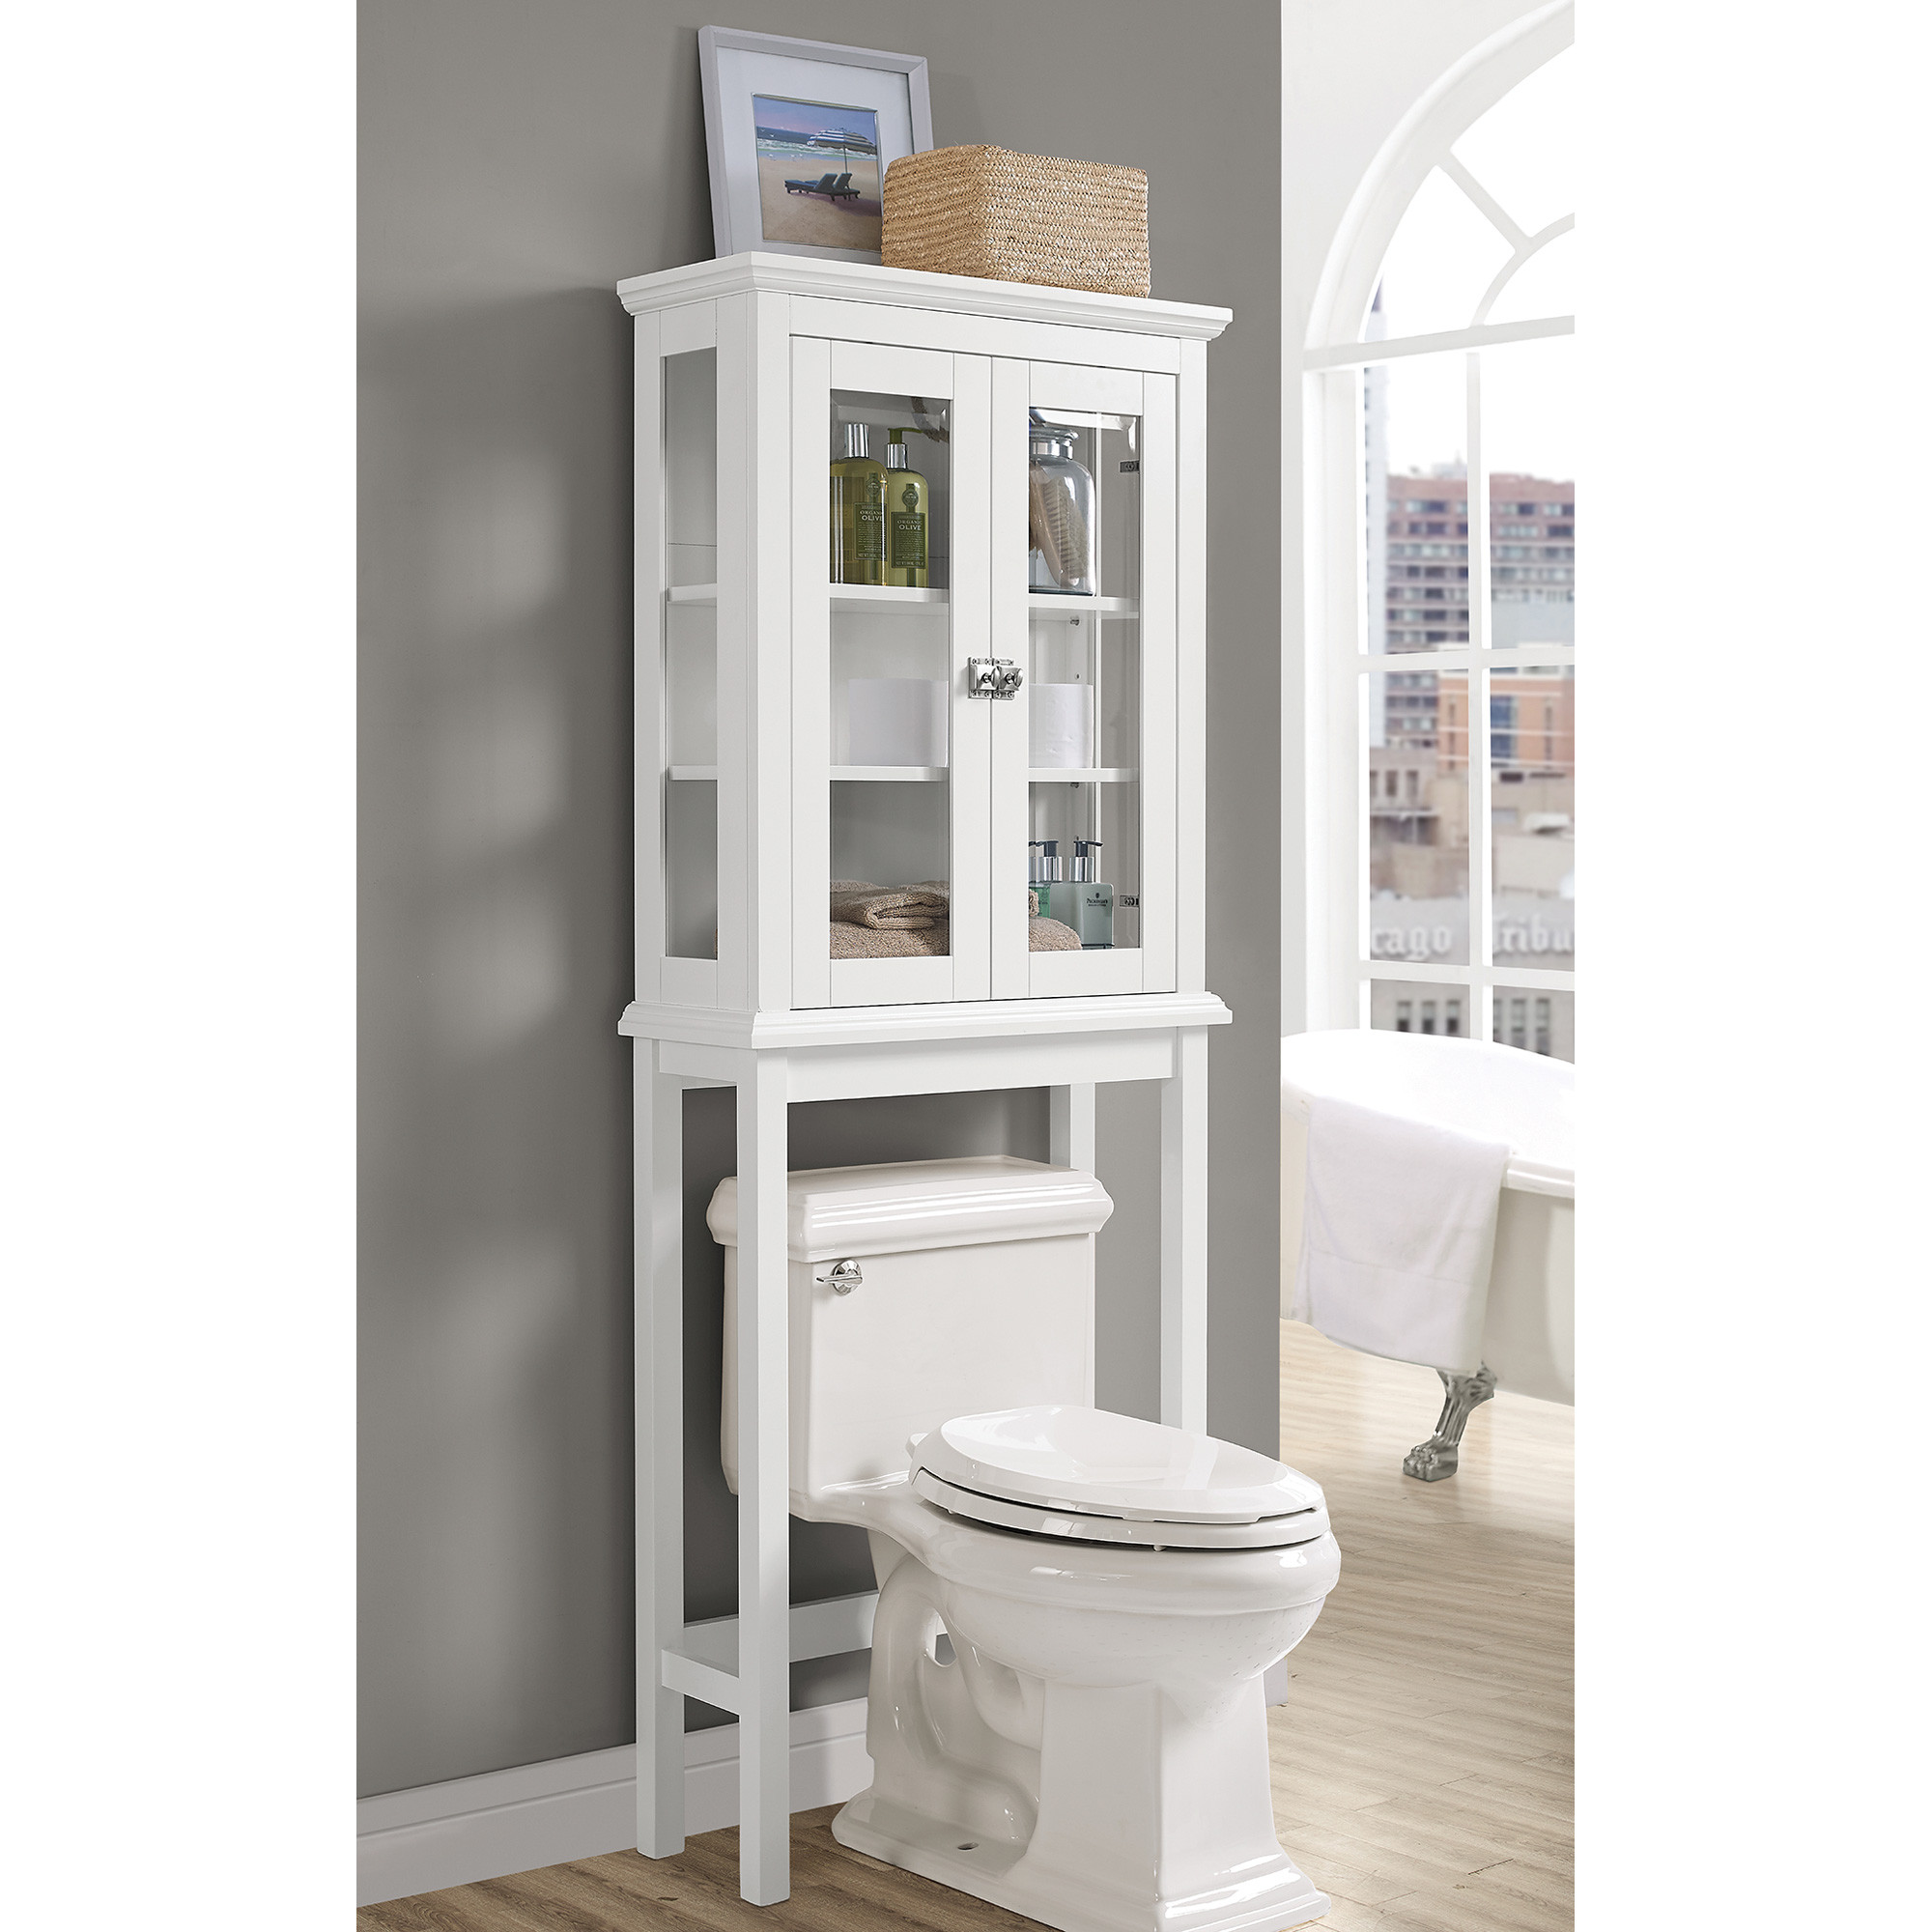 Over Toilet Bathroom Storage
 Linon Scarsdale Over Toilet Storage Cabinet — White